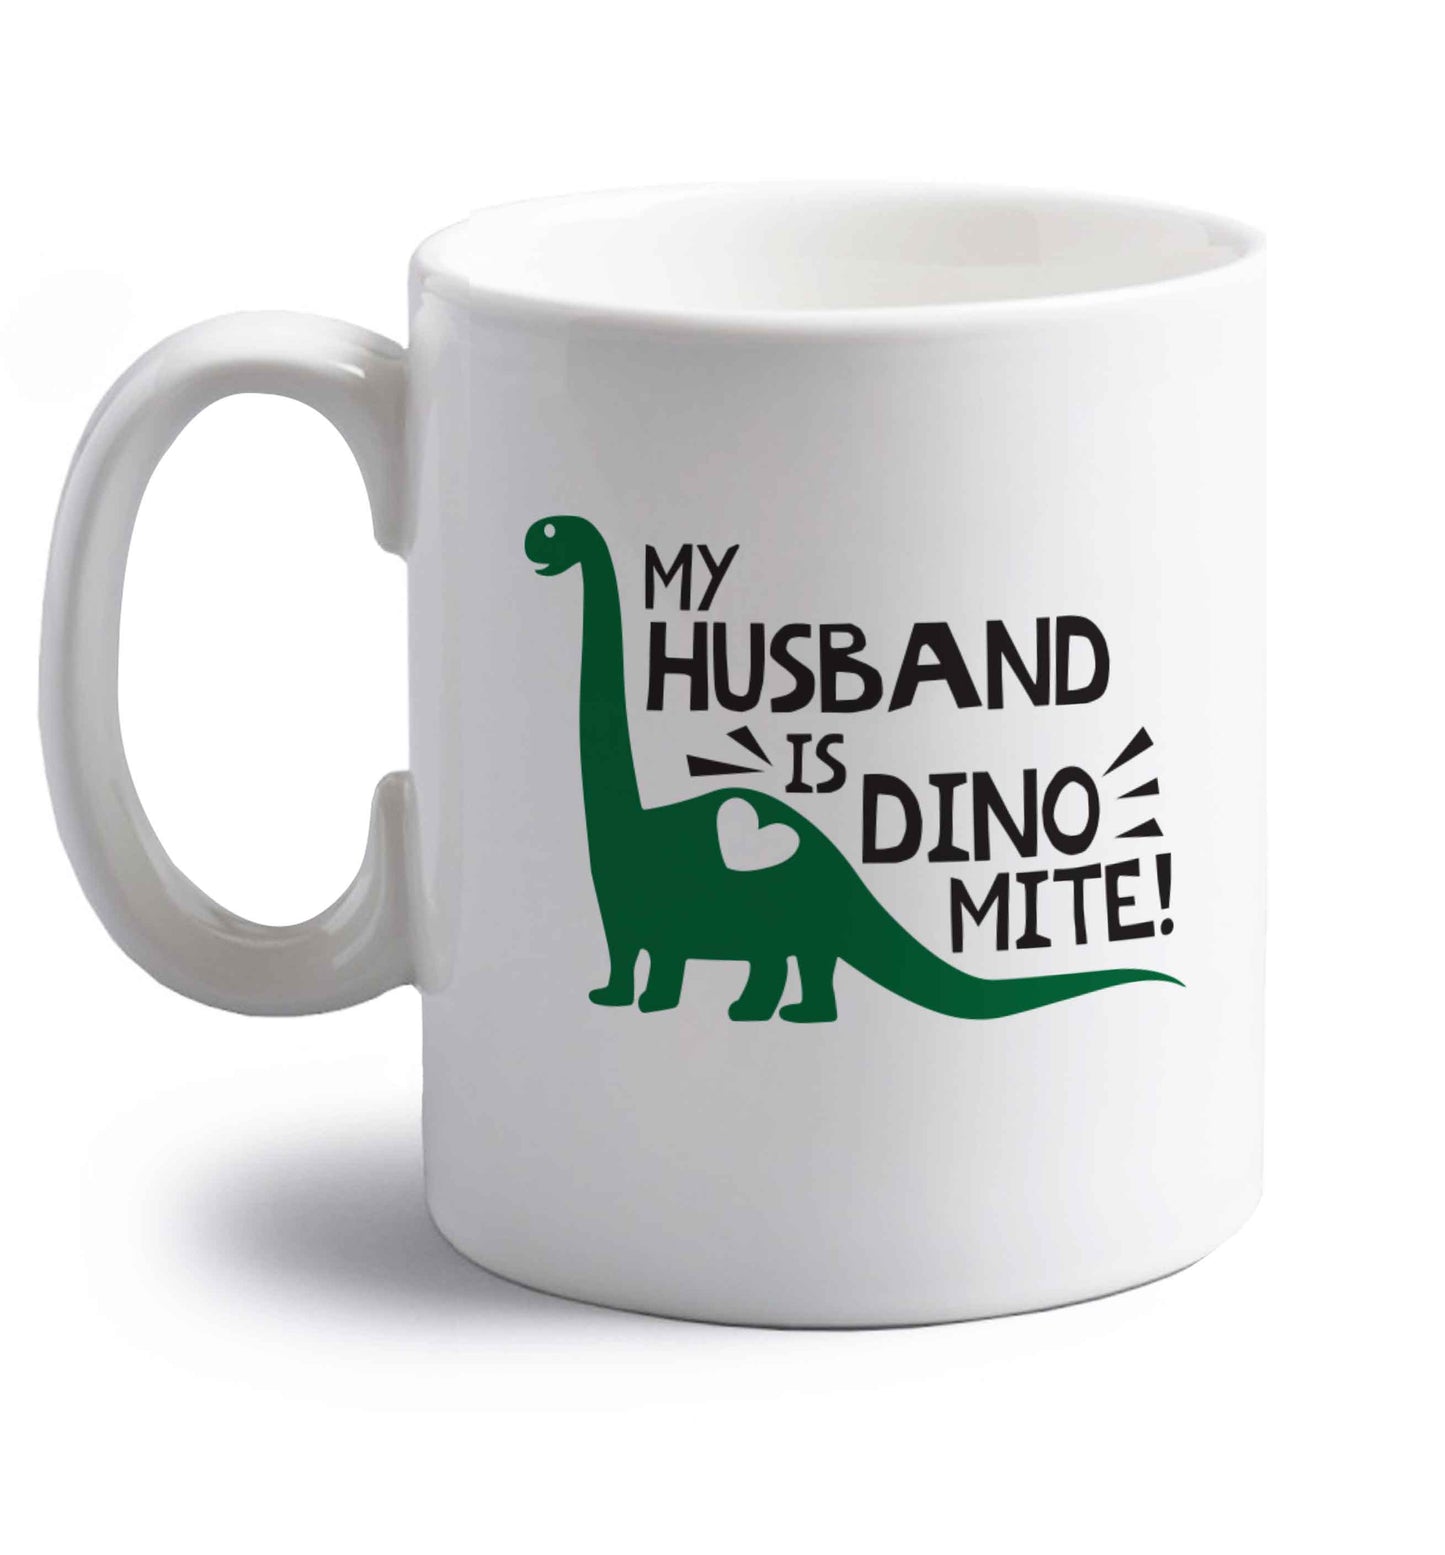 My husband is dinomite! right handed white ceramic mug 